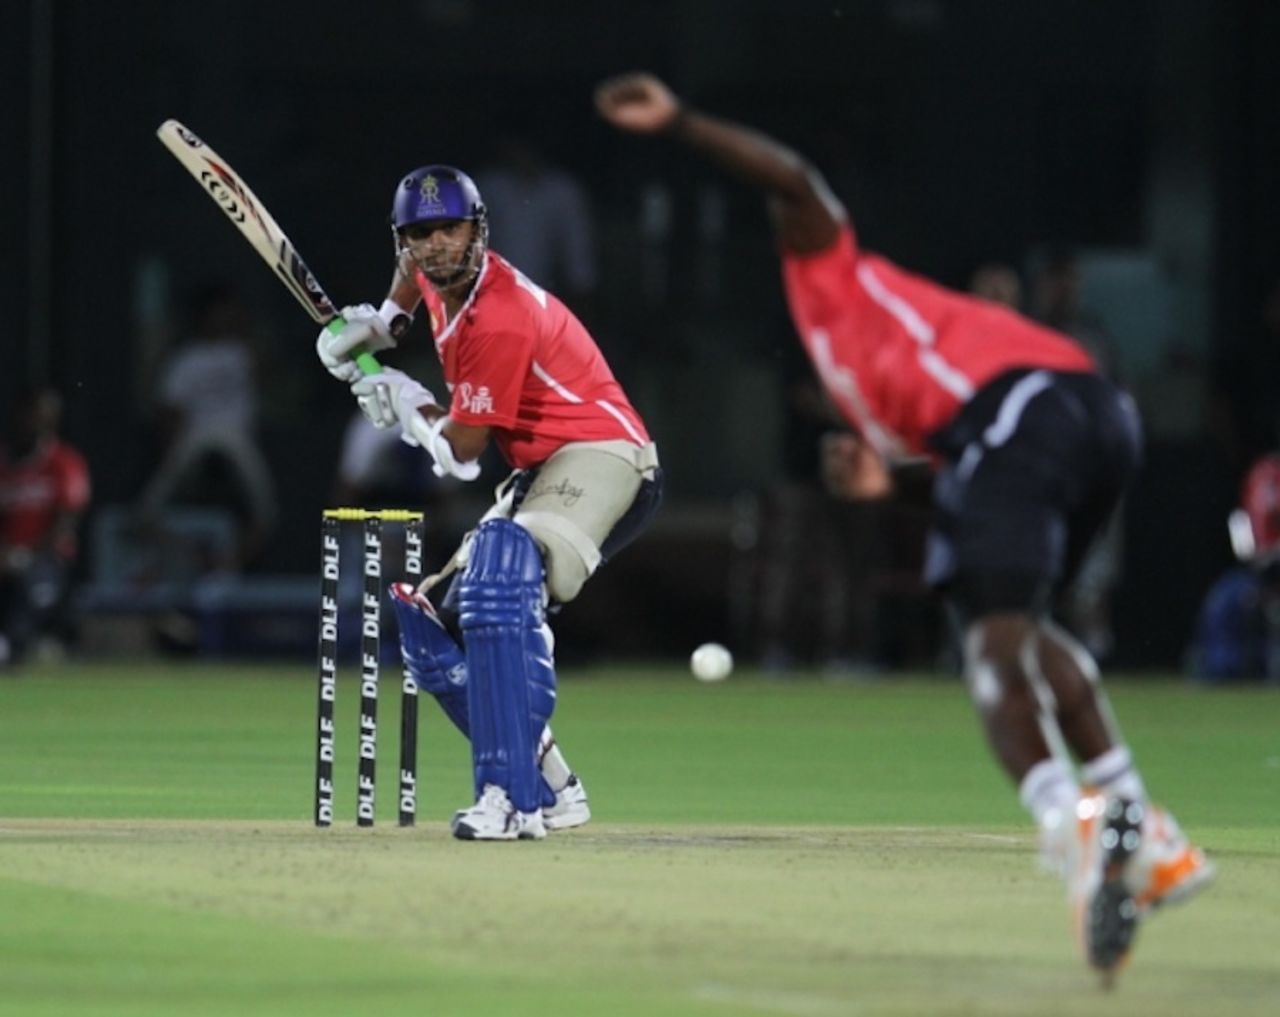 Rahul Dravid prepares to play a shot during a practice match at the Sawai Mansingh Stadium in Jaipur